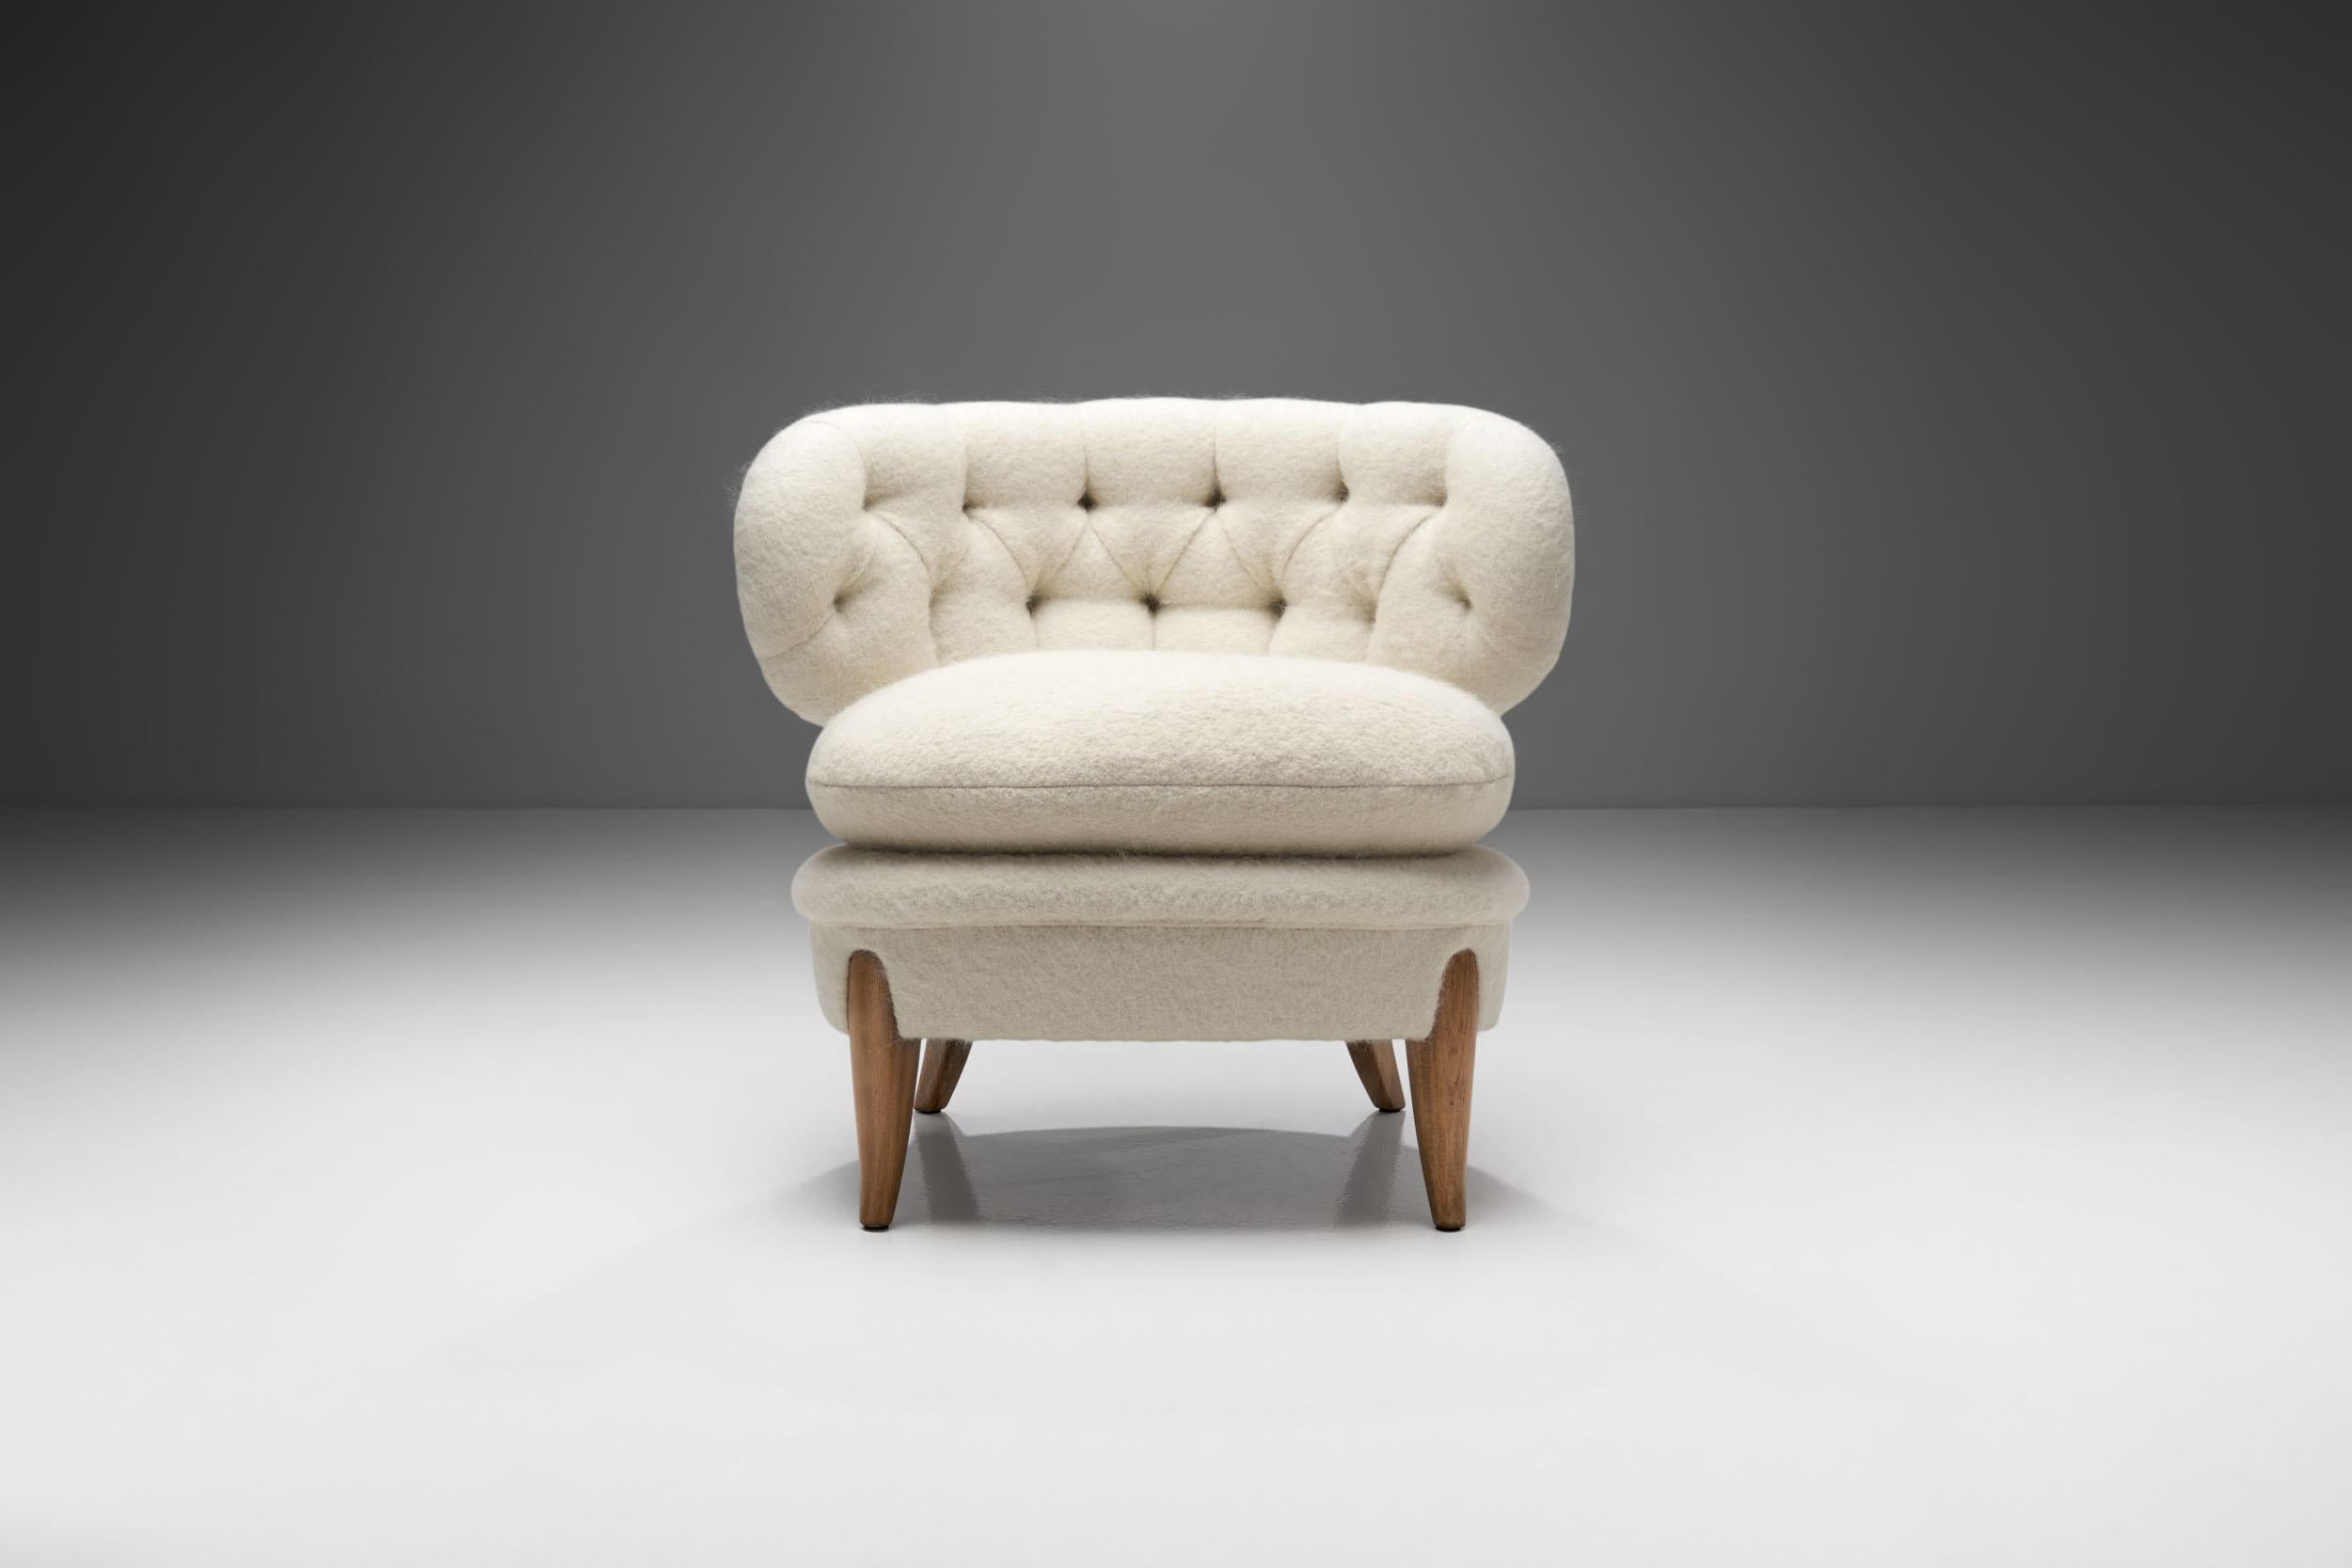 Mid-Century Modern “Schulz” Lounge Chair by Otto Schulz for Jio Möbler Jönköping, Sweden 1940s